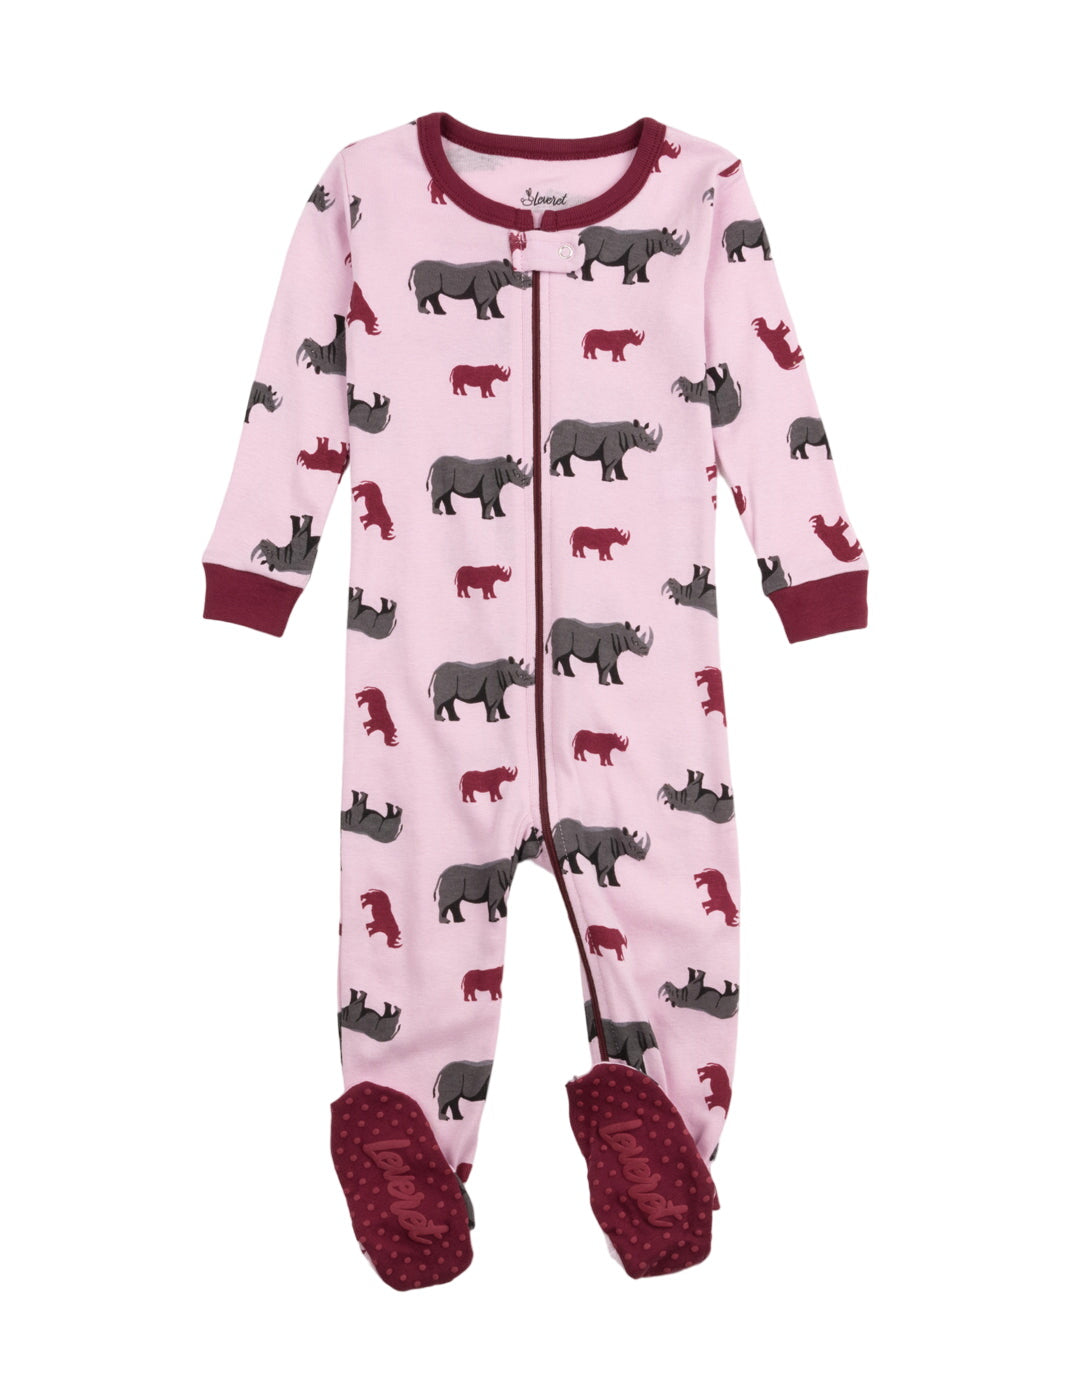 Baby Footed Zoo Animals Pajamas